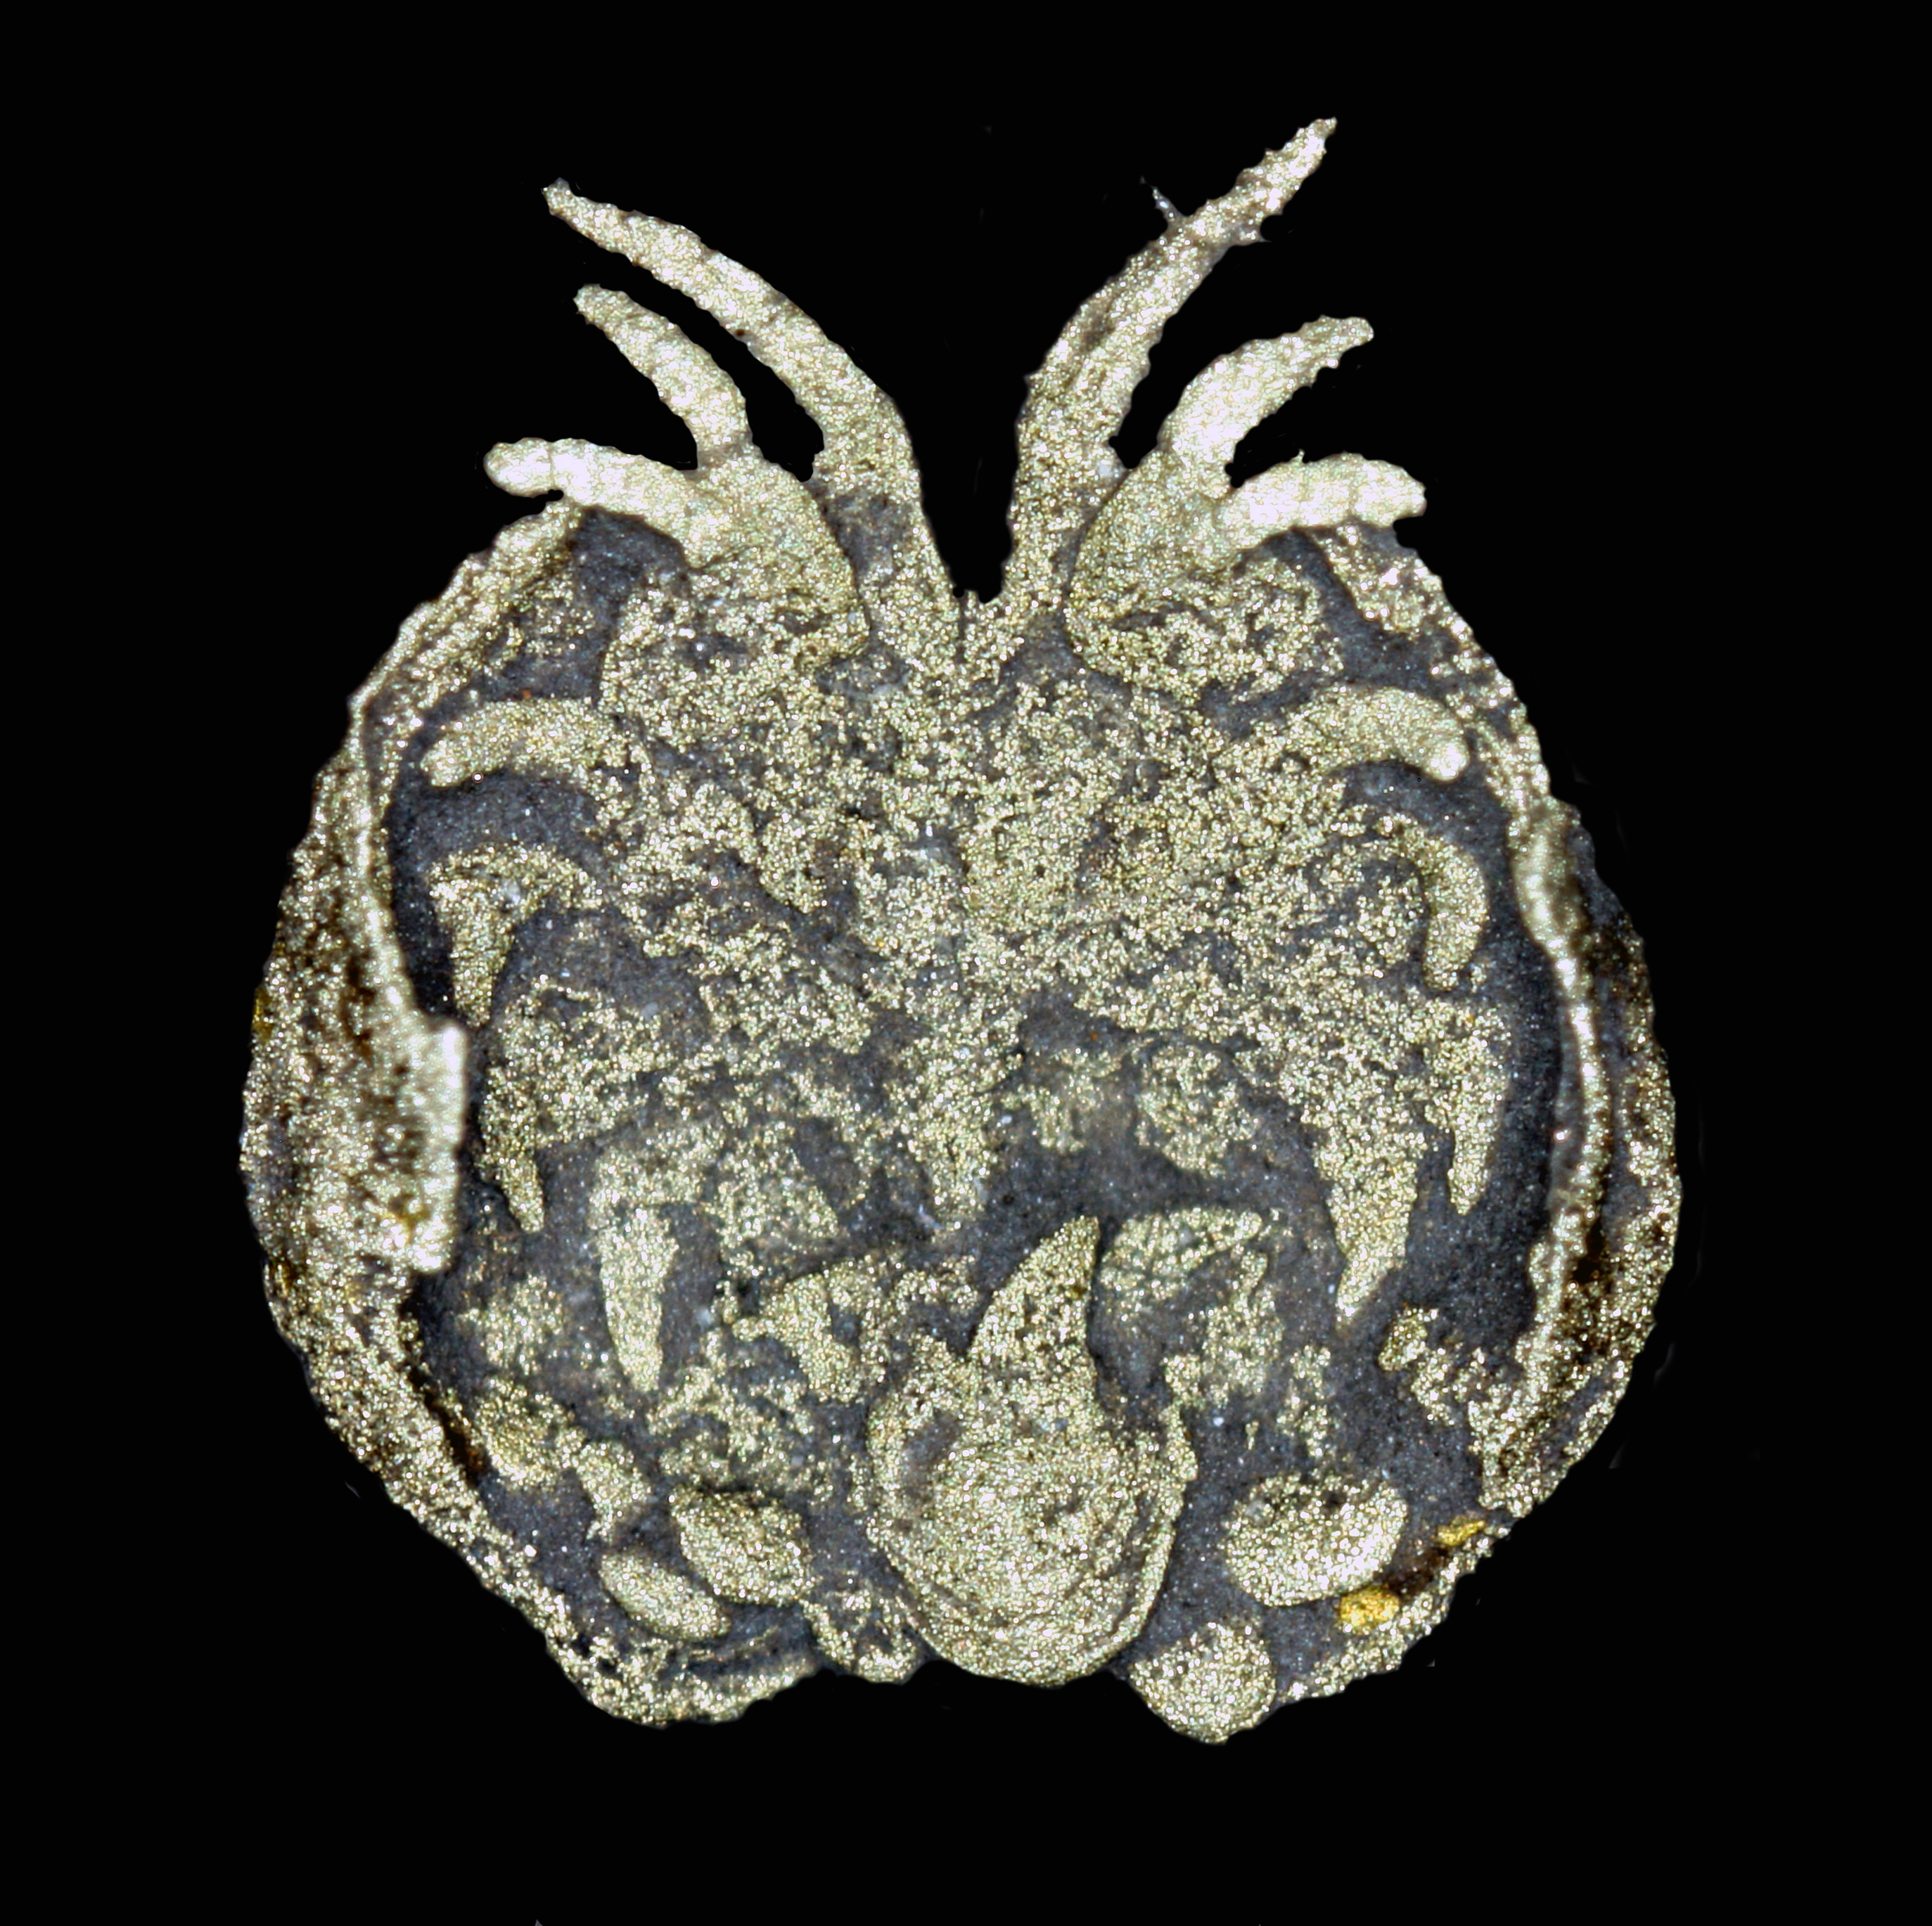 YPM IP 307300, holotype of Luprisca incuba Siveter et al., 2014.